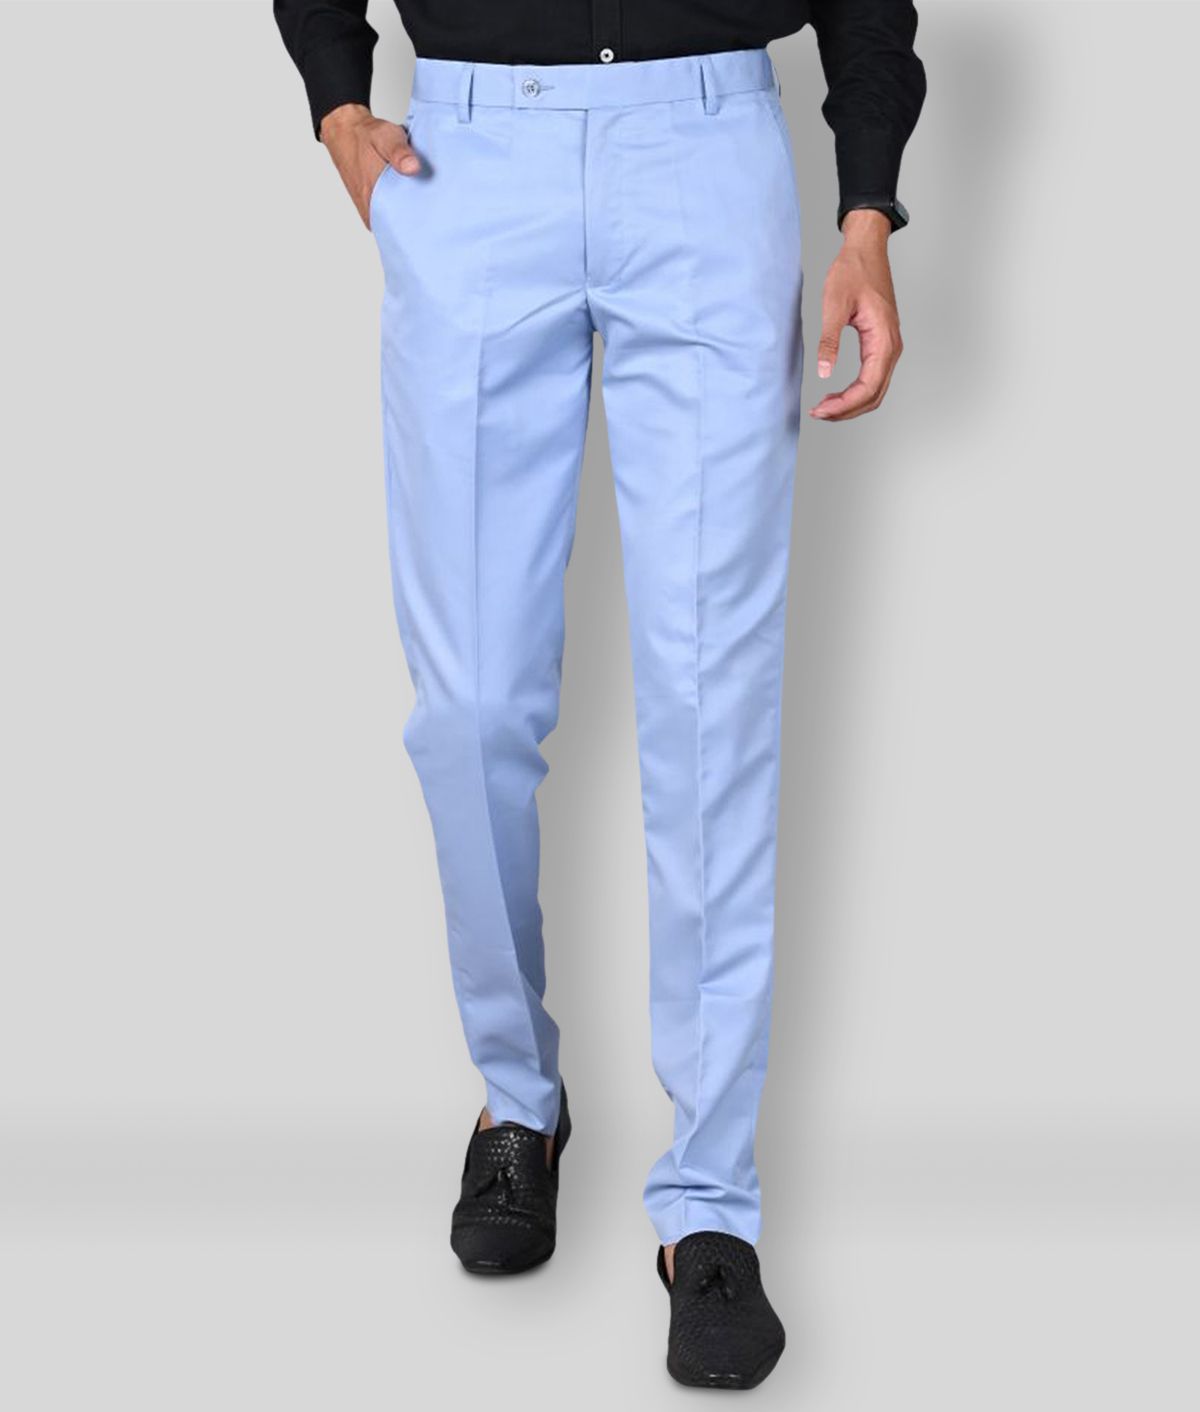     			MANCREW - Light Blue Polycotton Slim - Fit Men's Formal Pants ( Pack of 1 )